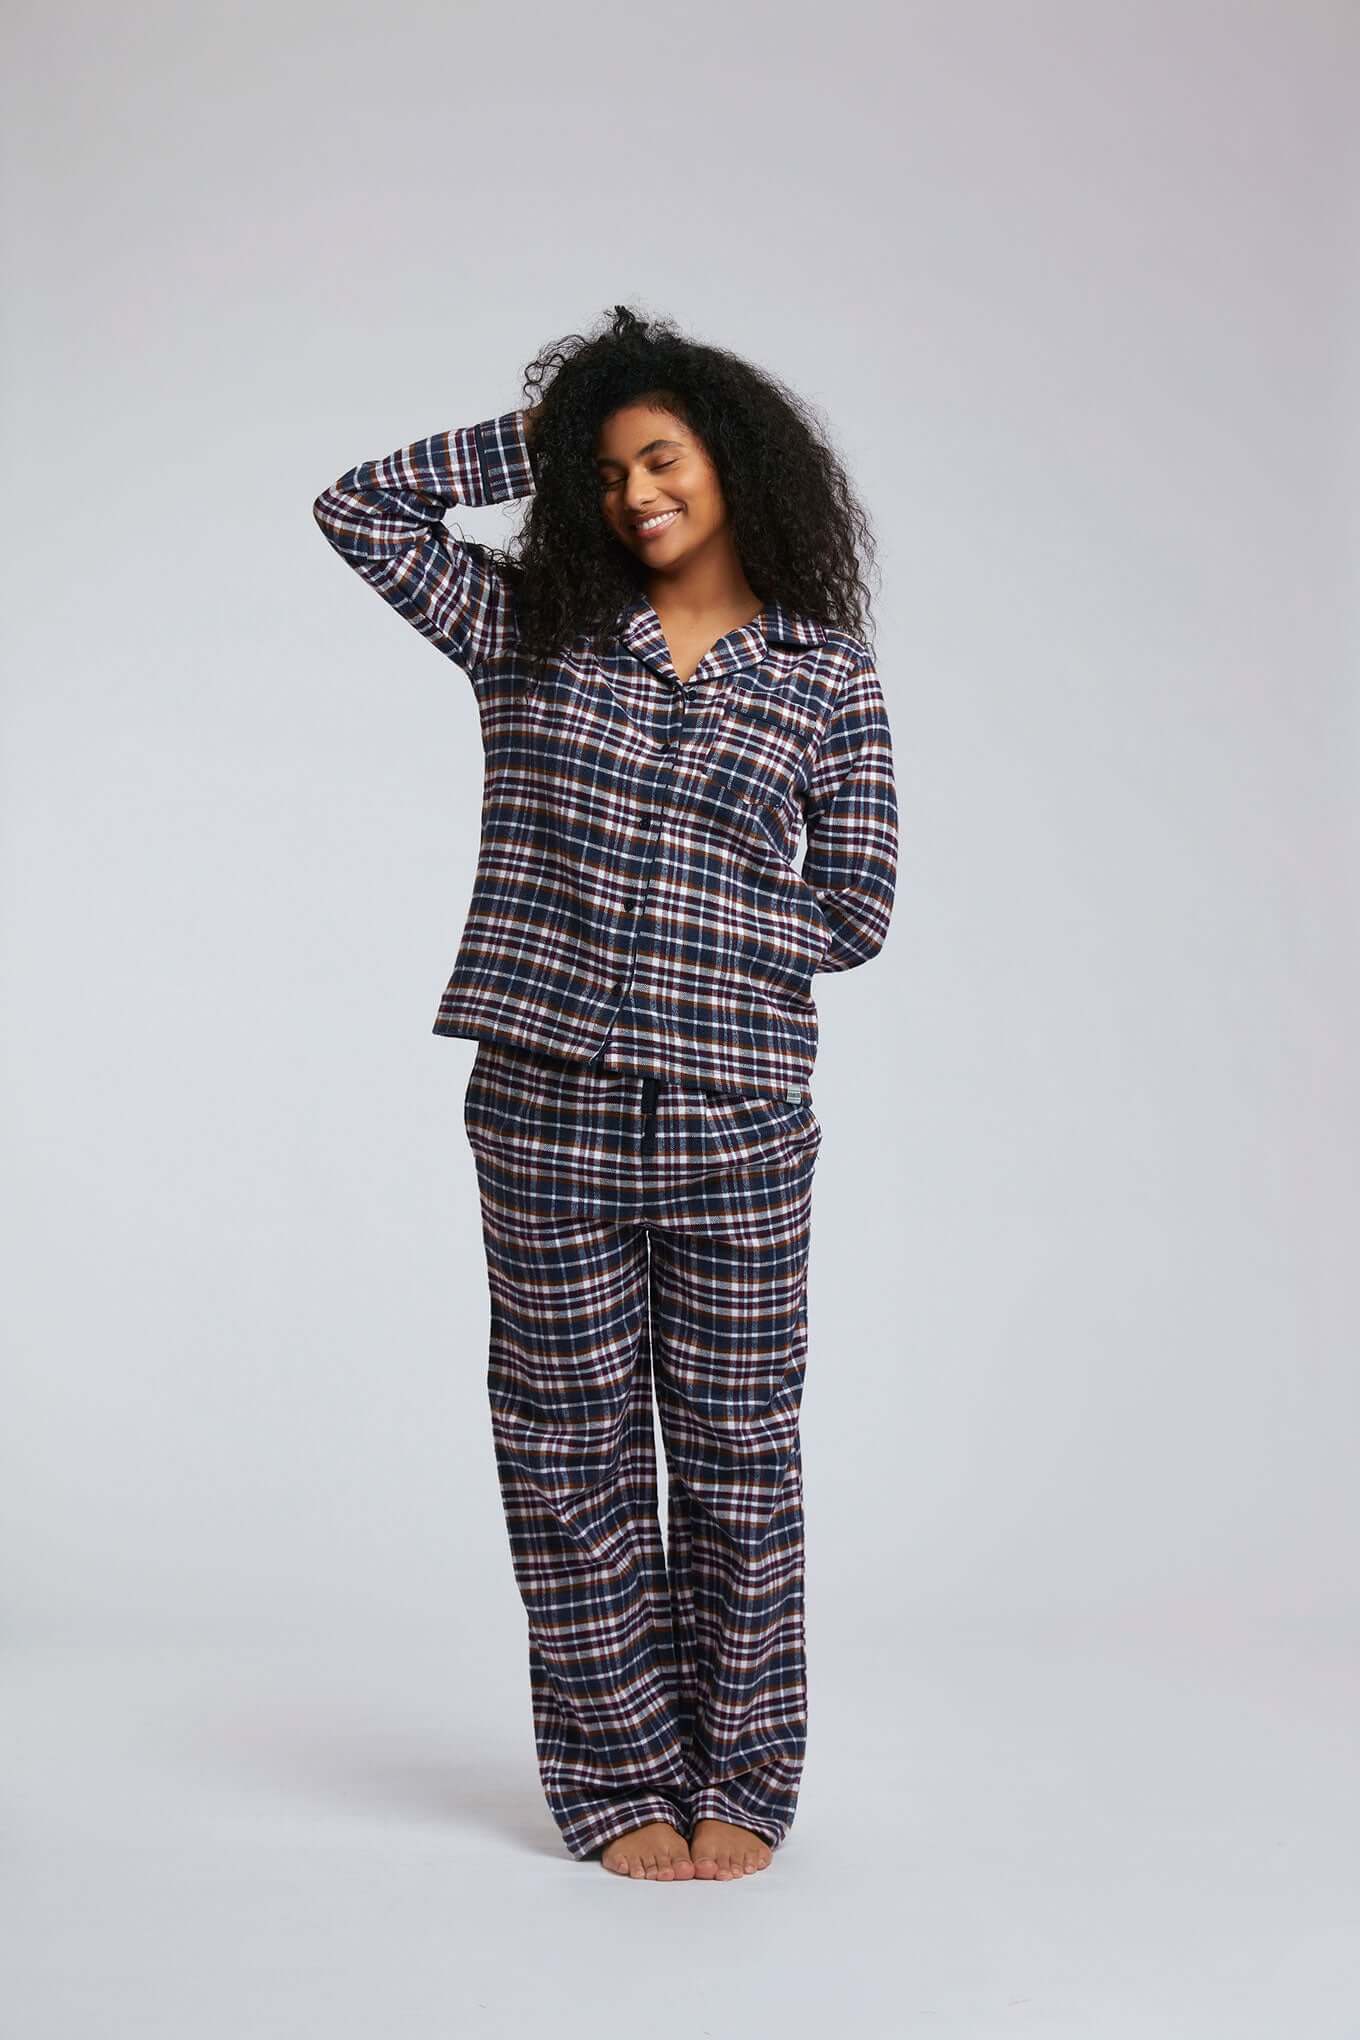 JIM JAM Womens Organic Cotton Pyjama Set Navy, Size 5 / UK 16 / EUR 44